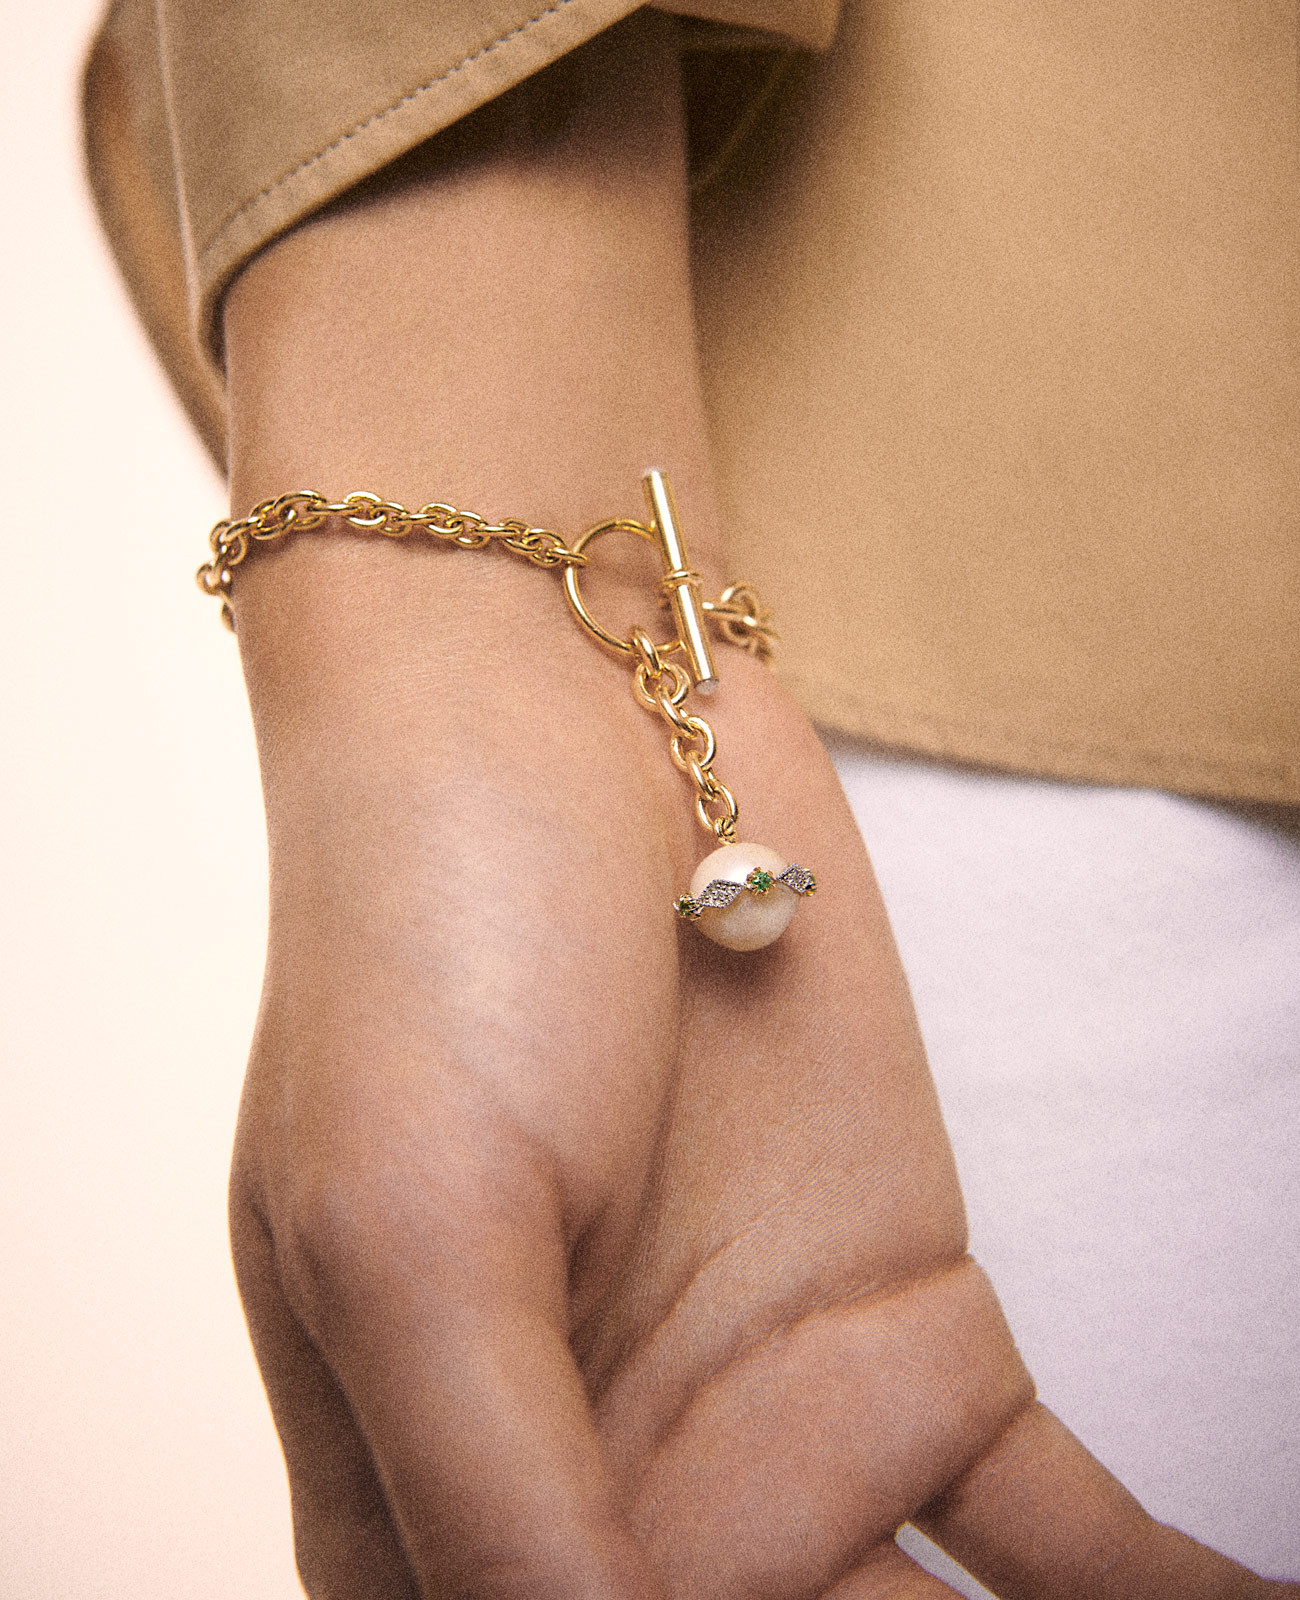 CHELSEA N°4 bracelet pascale monvoisin jewelry paris